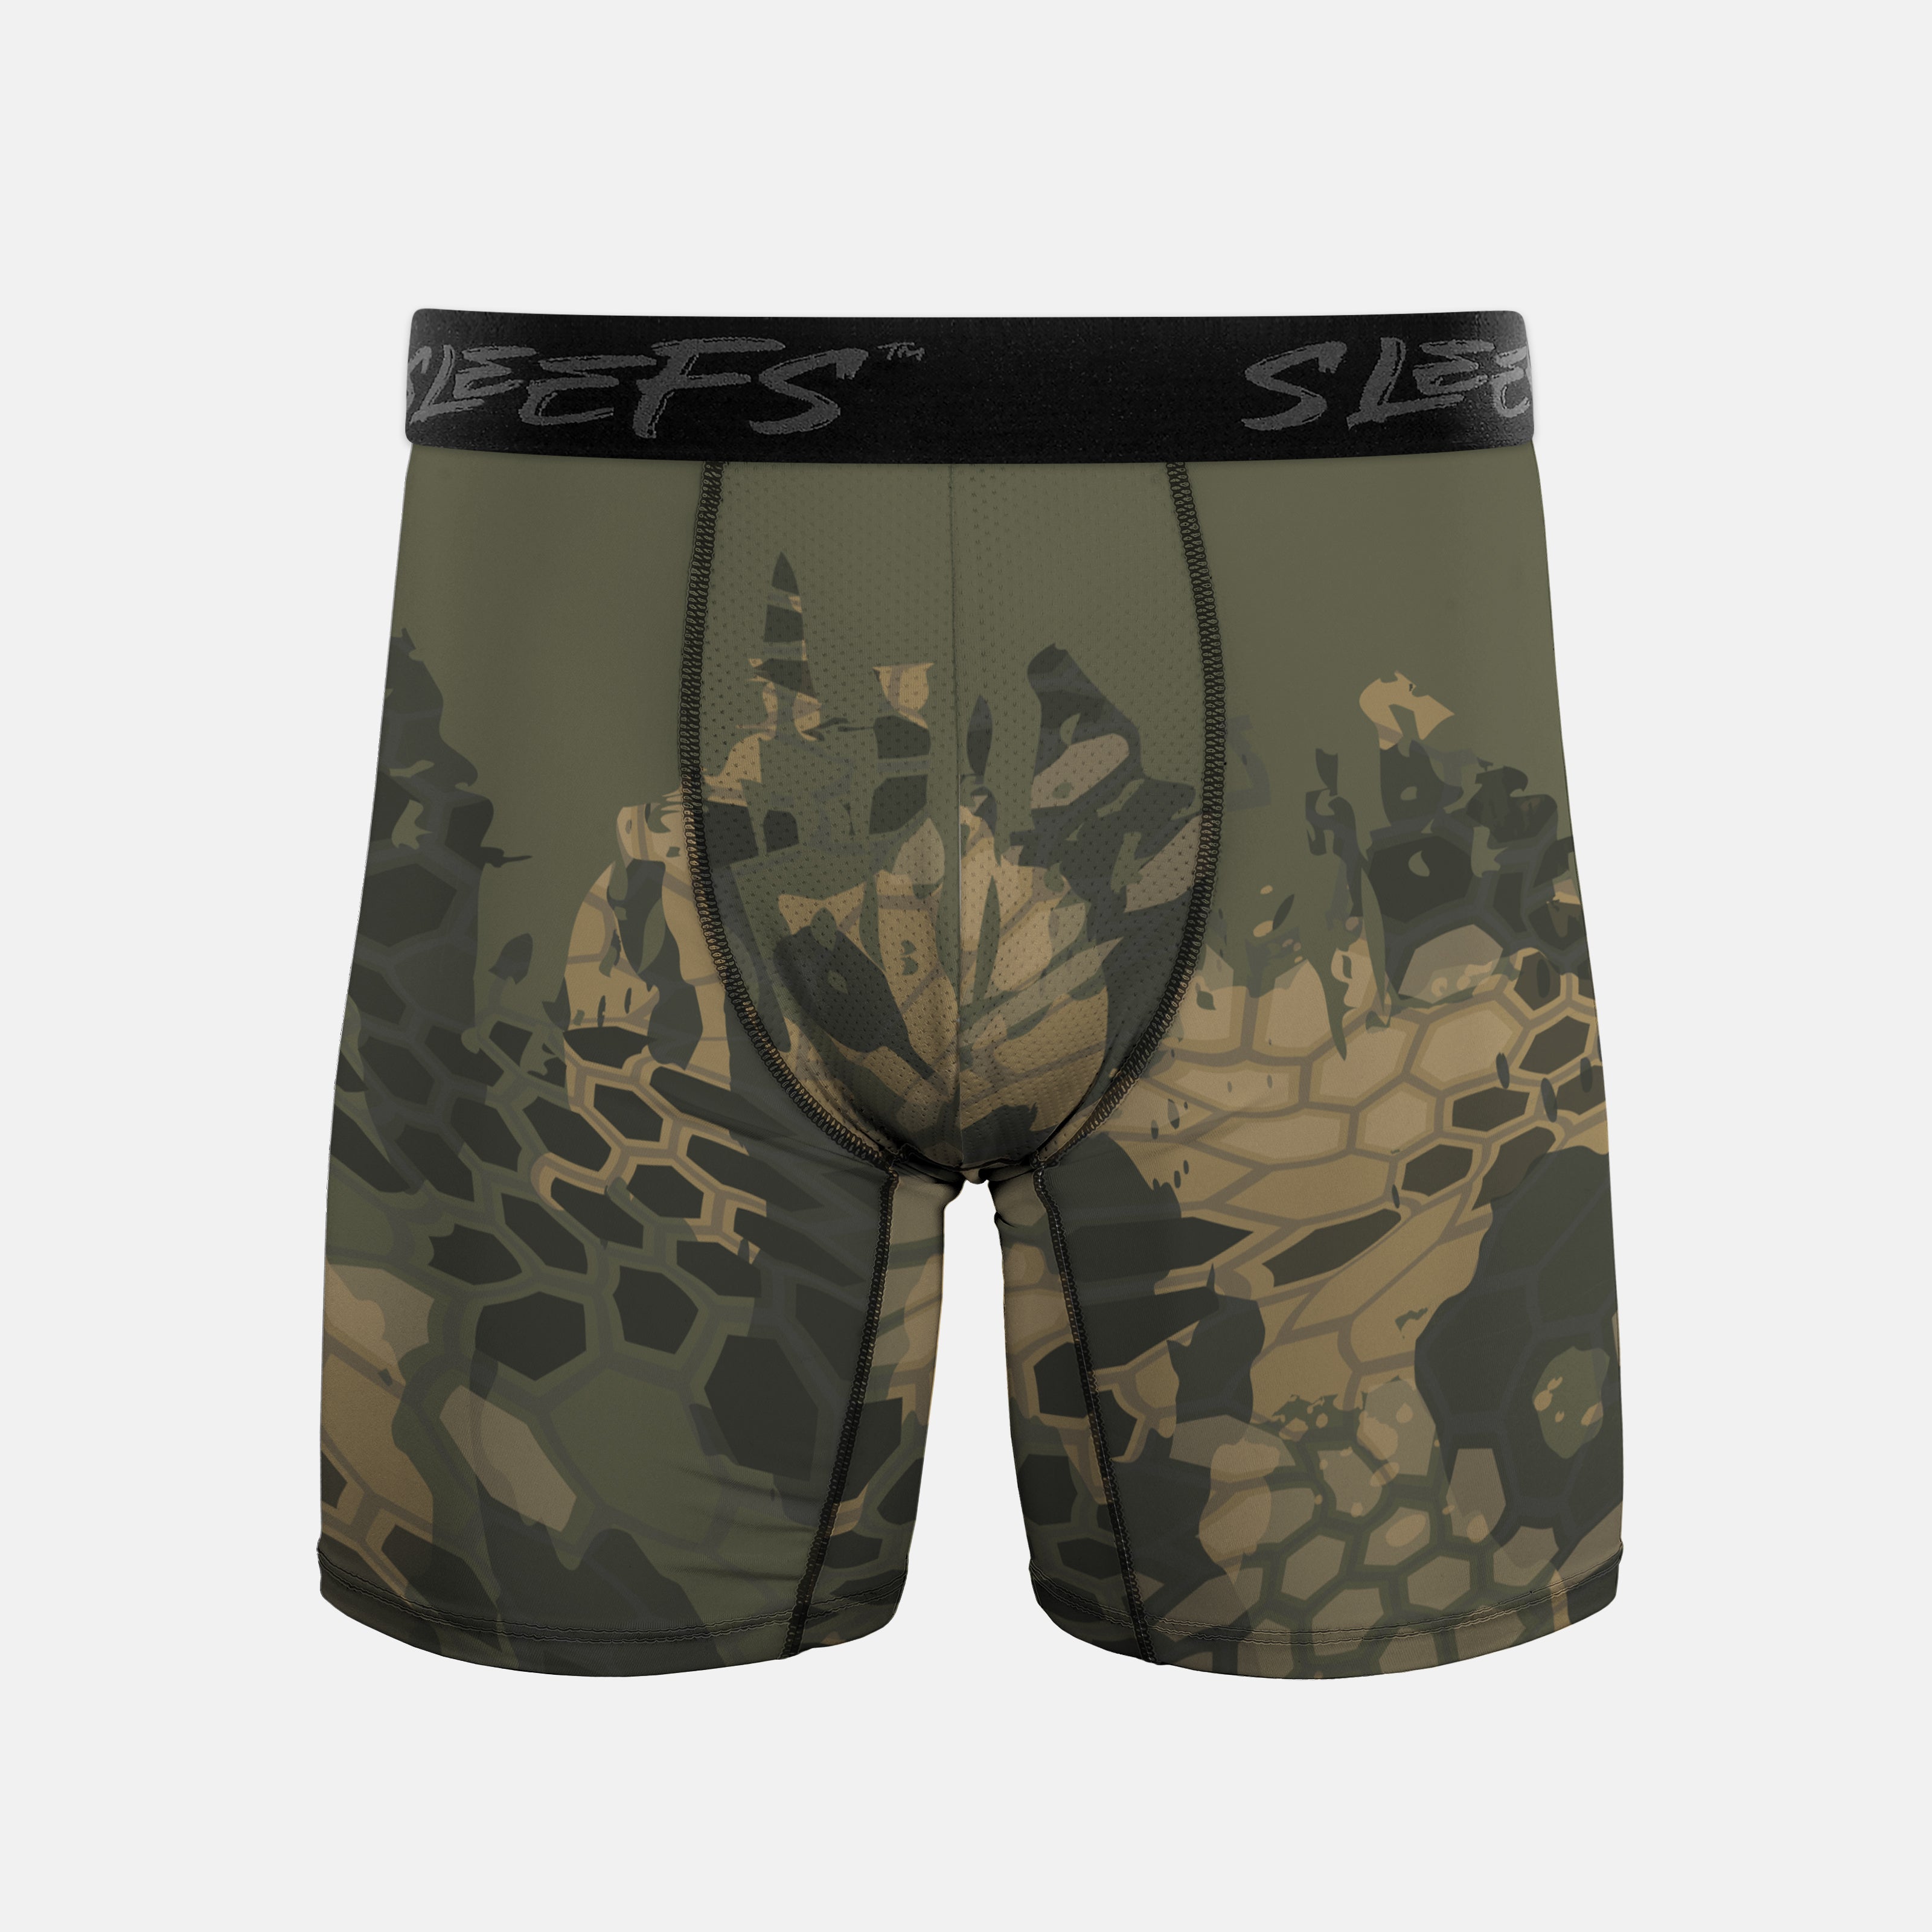 Mossy Oak Men's Camo Boxers, Camouflage Boxer Shorts Underwear